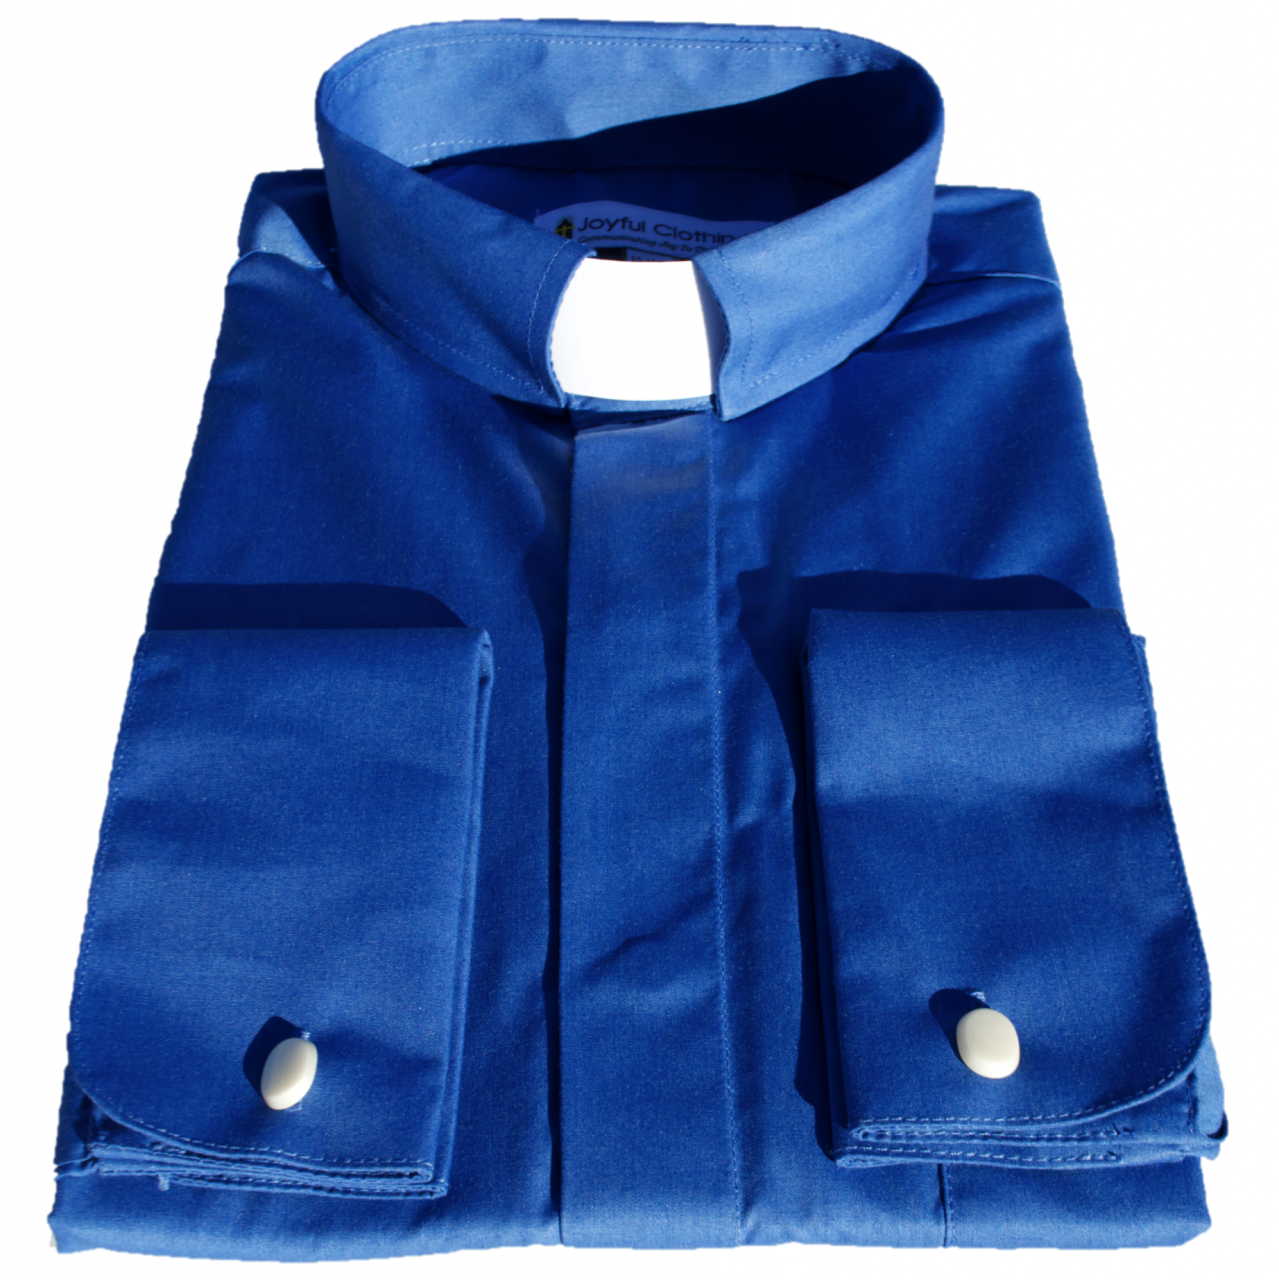 121. Men's Long-Sleeve Tab-Collar Clergy Shirt - Royal Blue